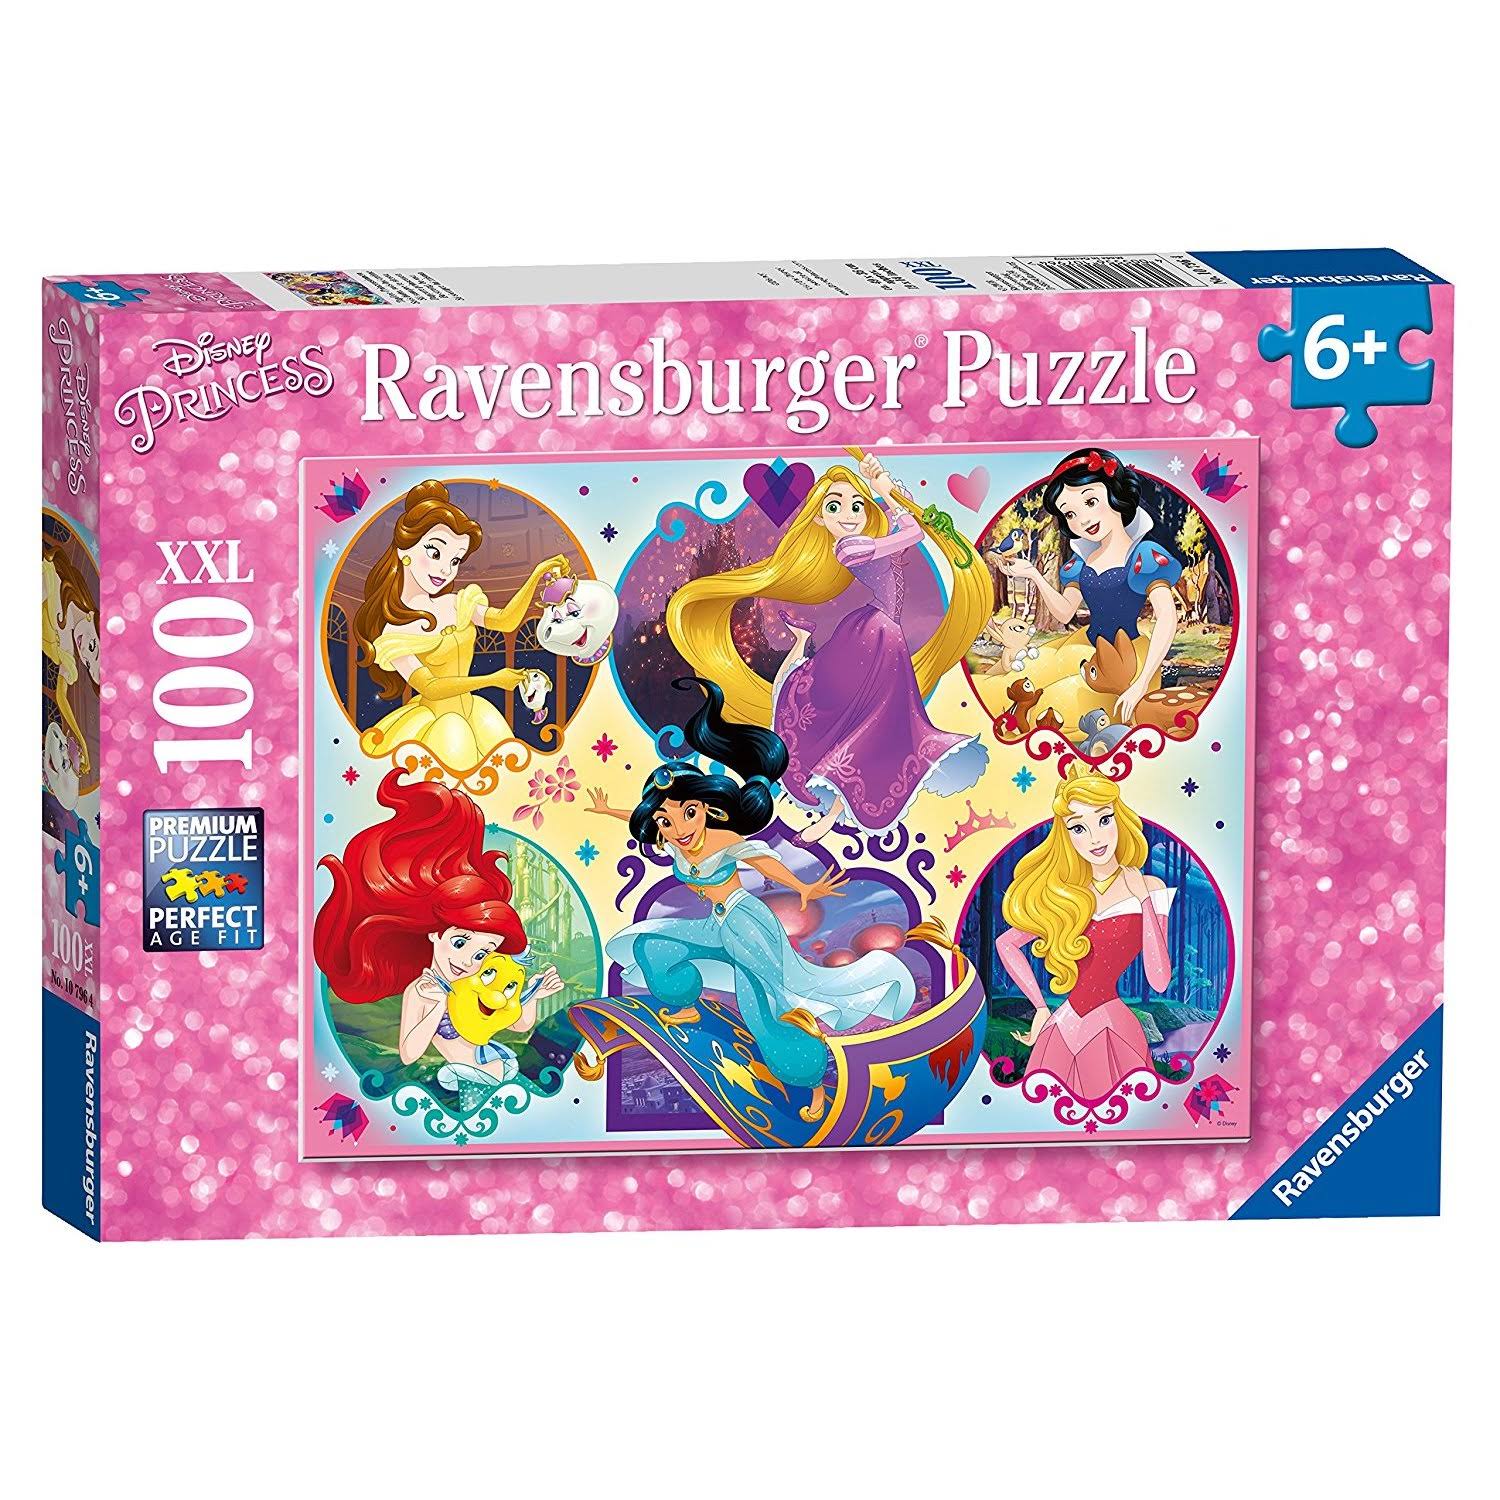 Ravensburger Disney Princess Jigsaw Puzzle - XX-Large, 100pcs